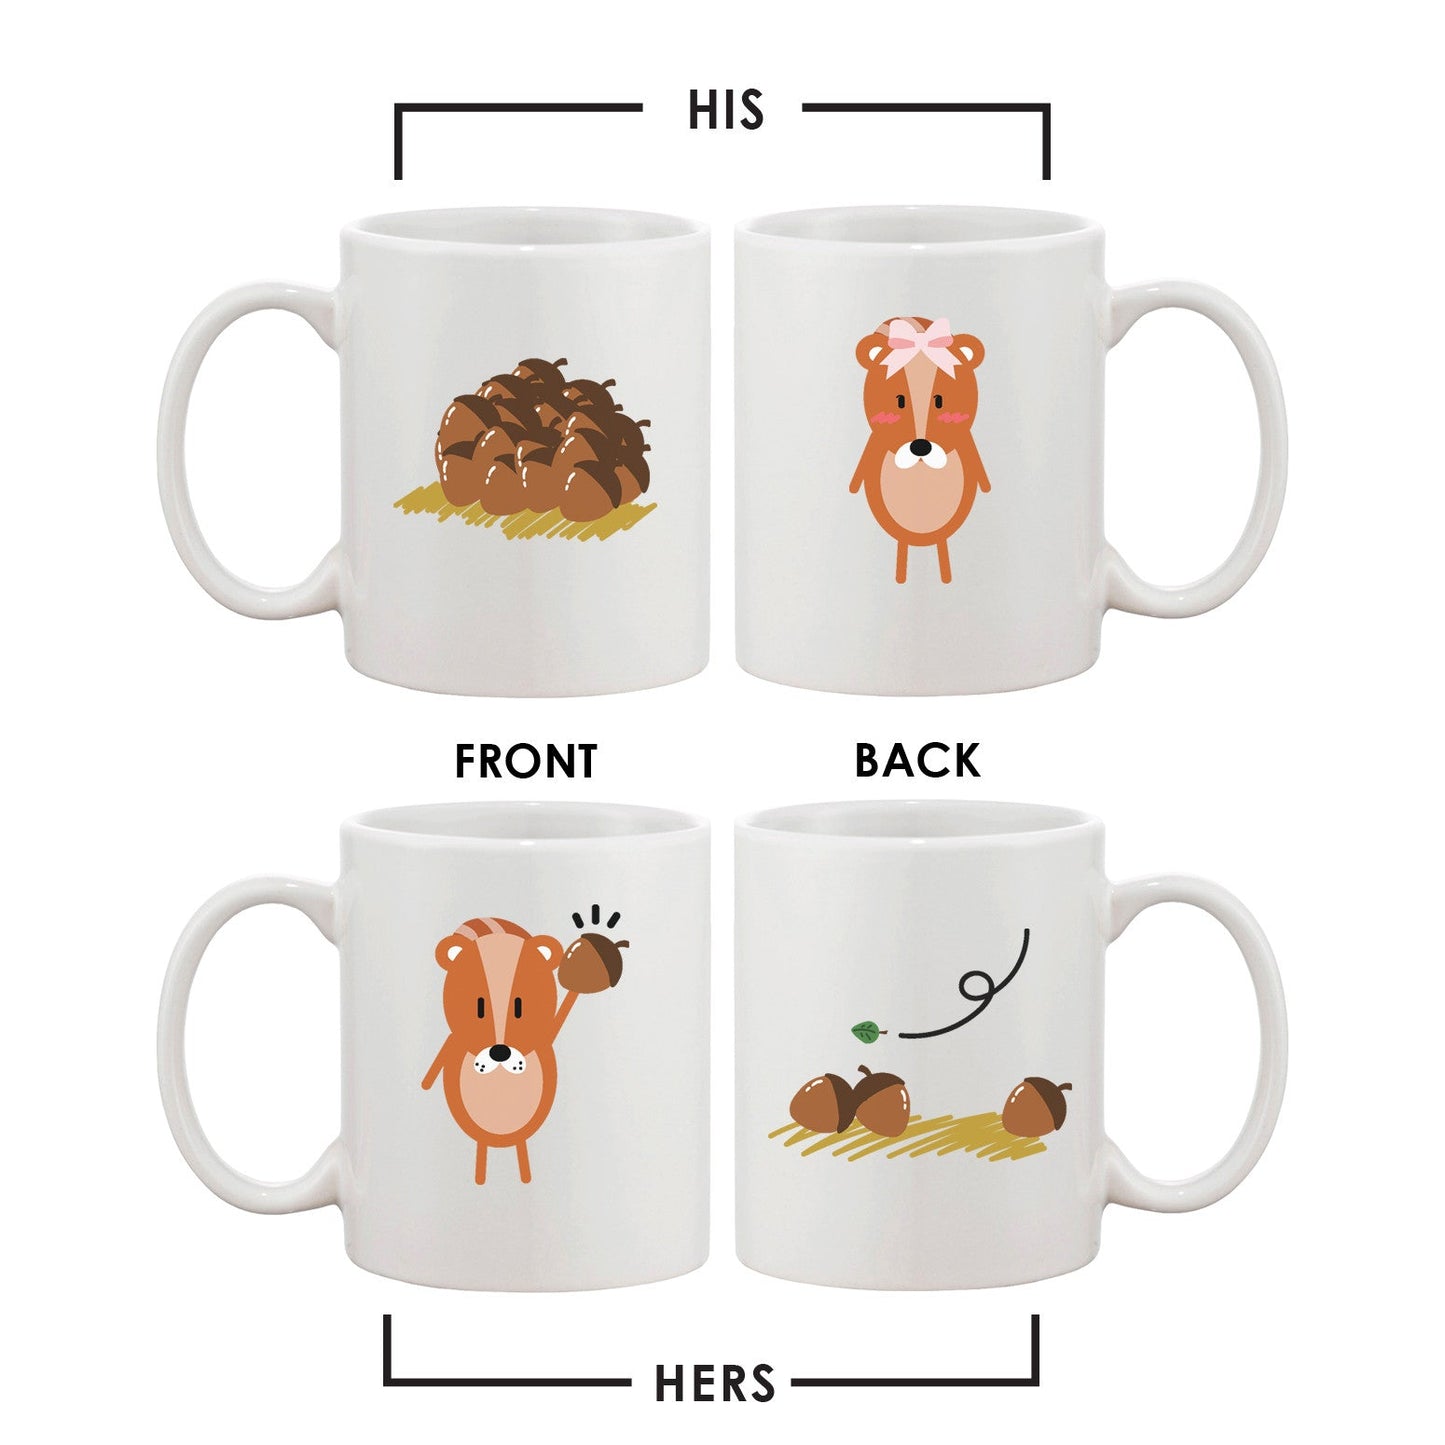 Funny Squirrel Couple Mugs Cute Graphic Design Ceramic Coffee Mug Cup 11 oz White